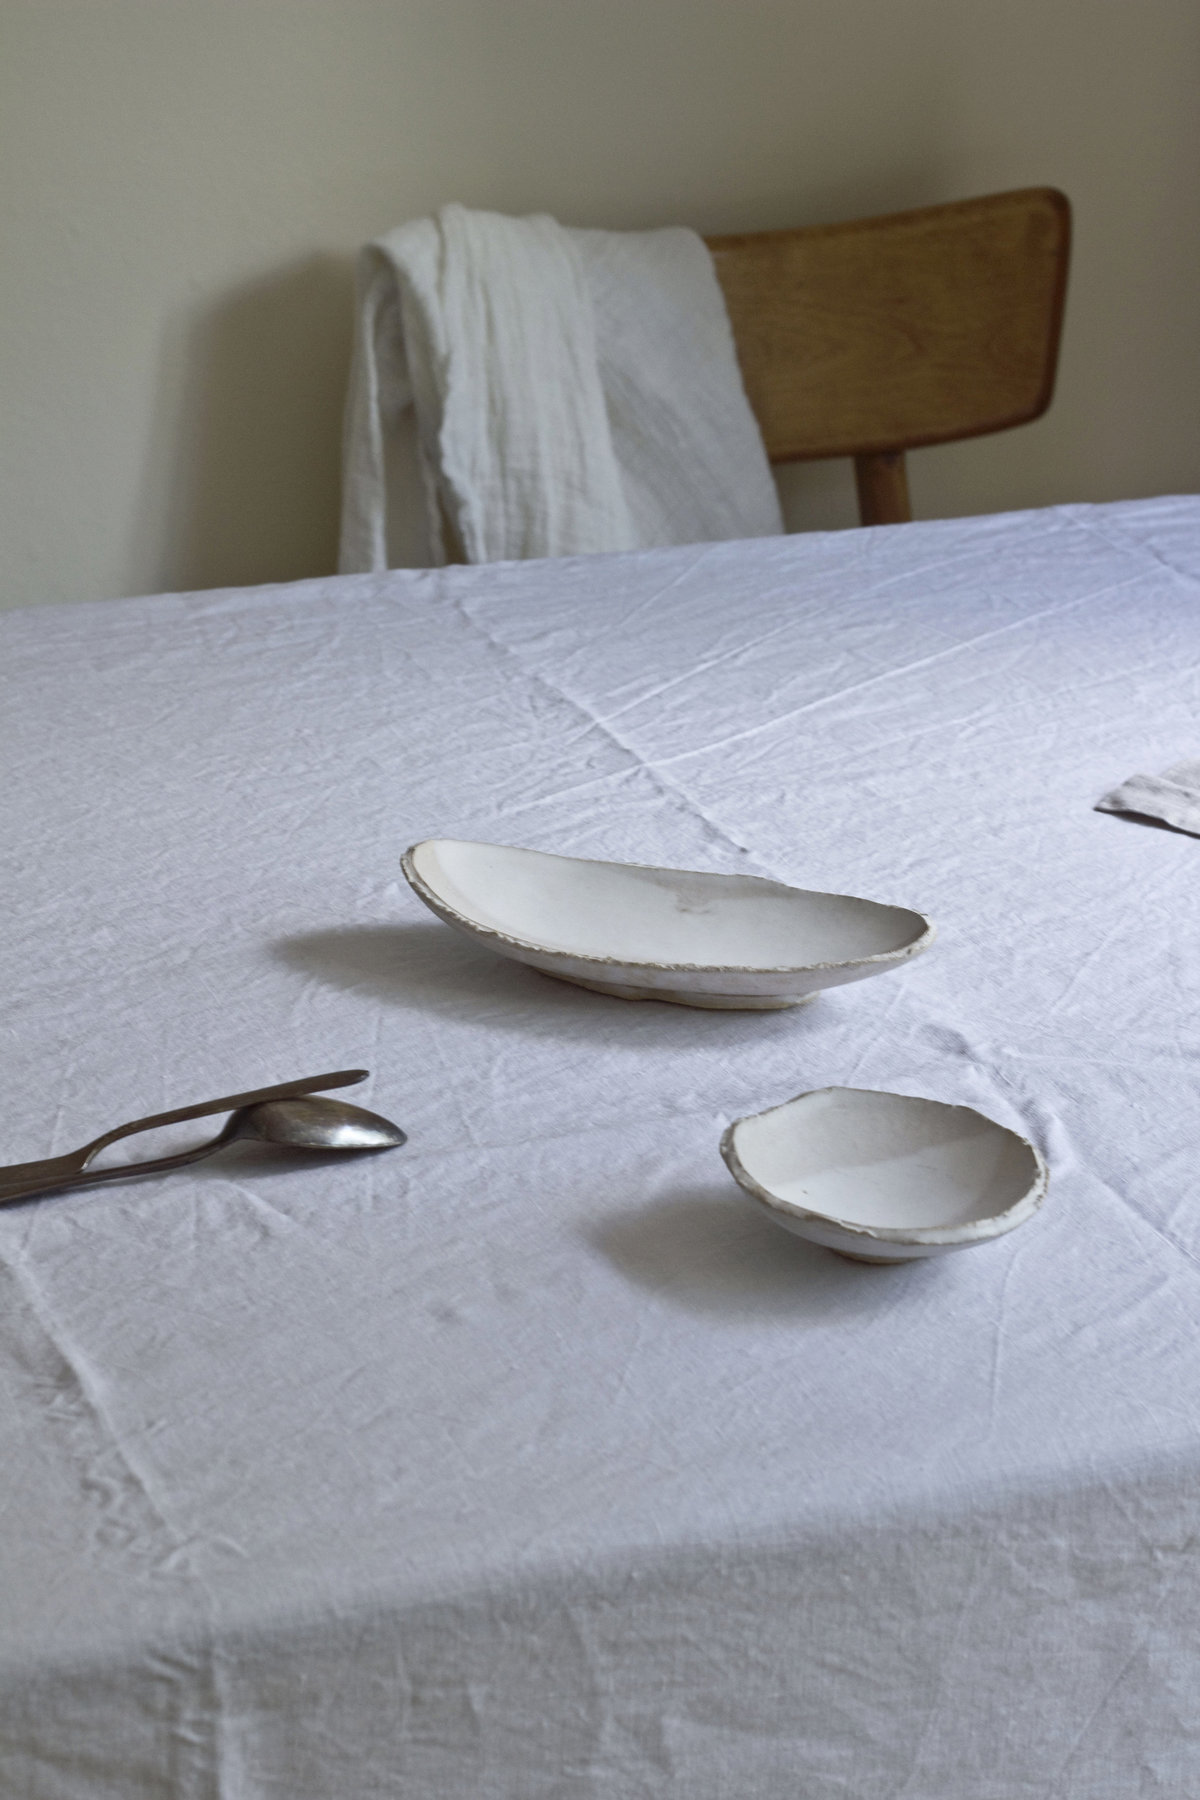 Yasha-Butler-Ceramic-Tablescape-Plate-Bowl-White-08-2018-5072-3500px